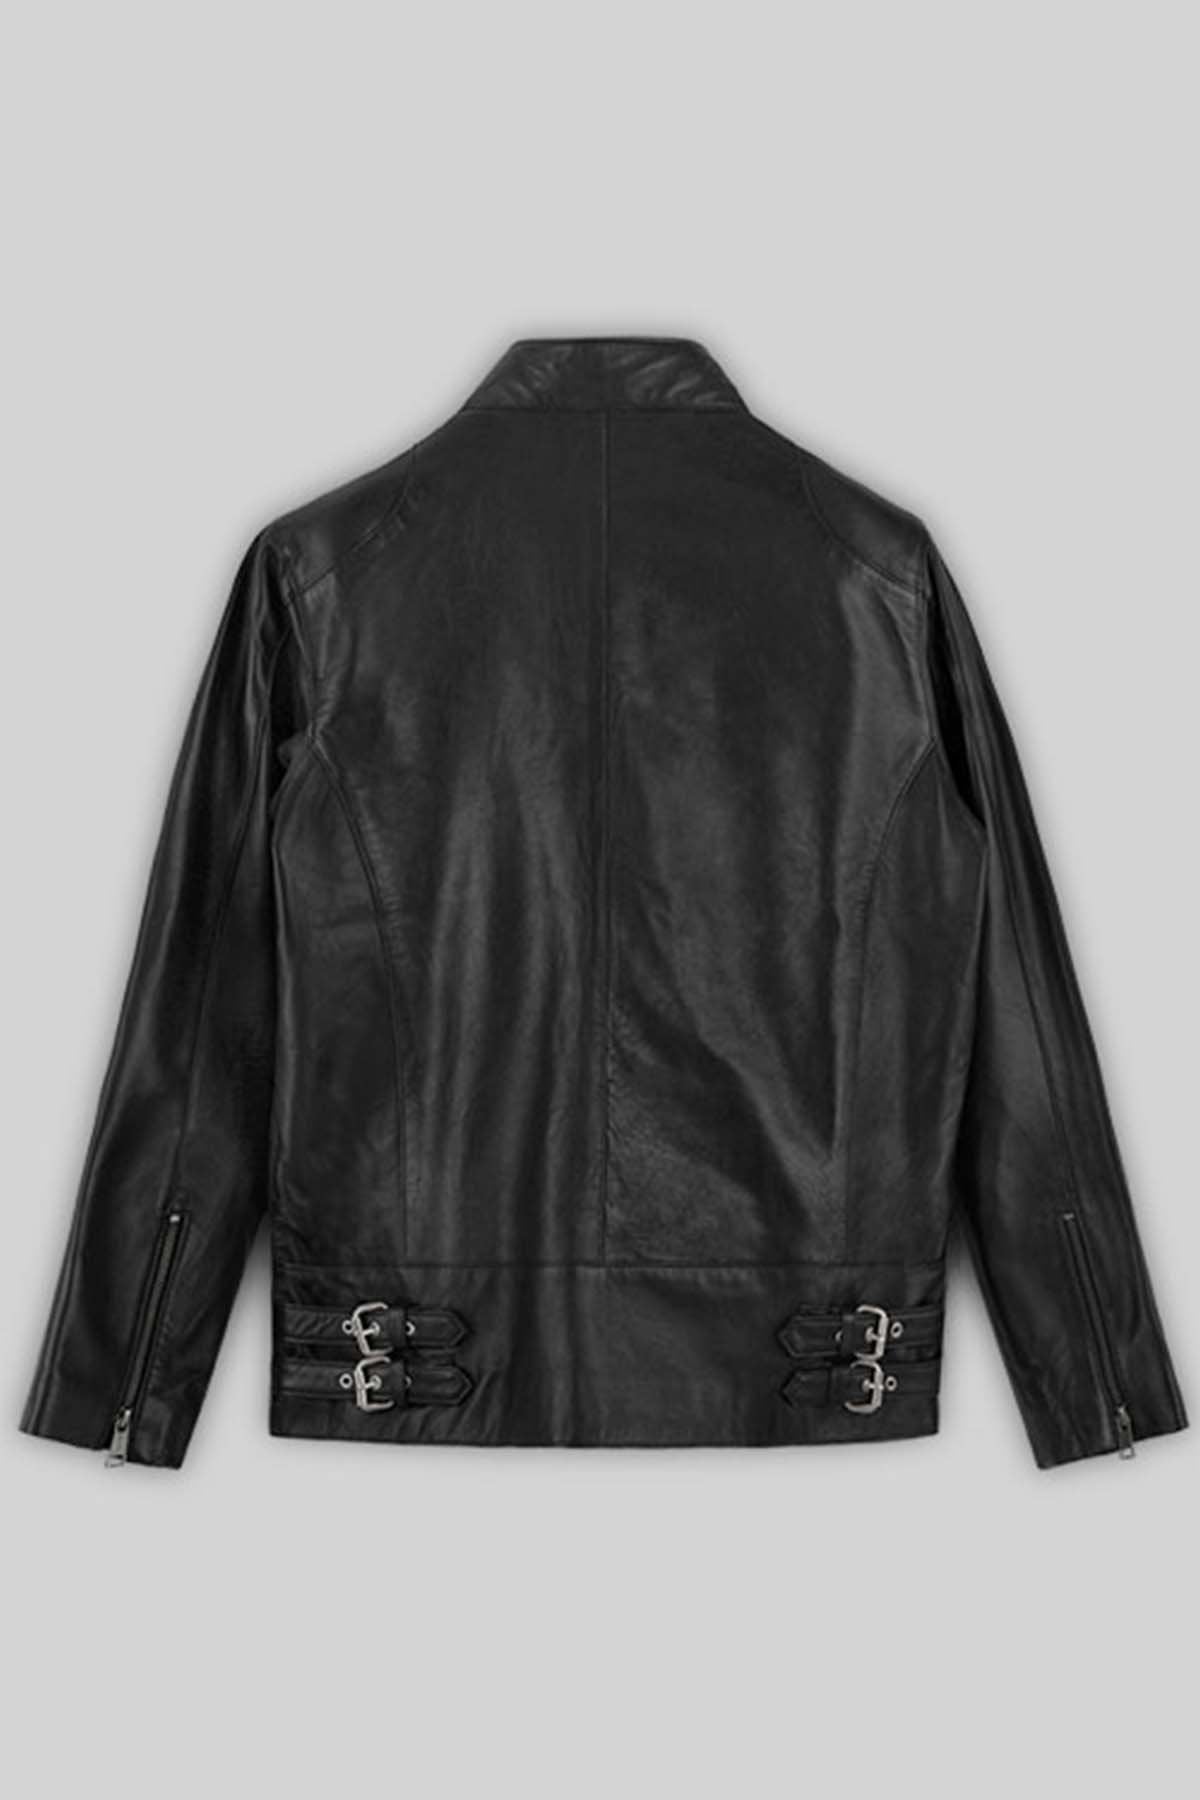 Captain America Leather Jacket Endgame – Fairlynx Inc